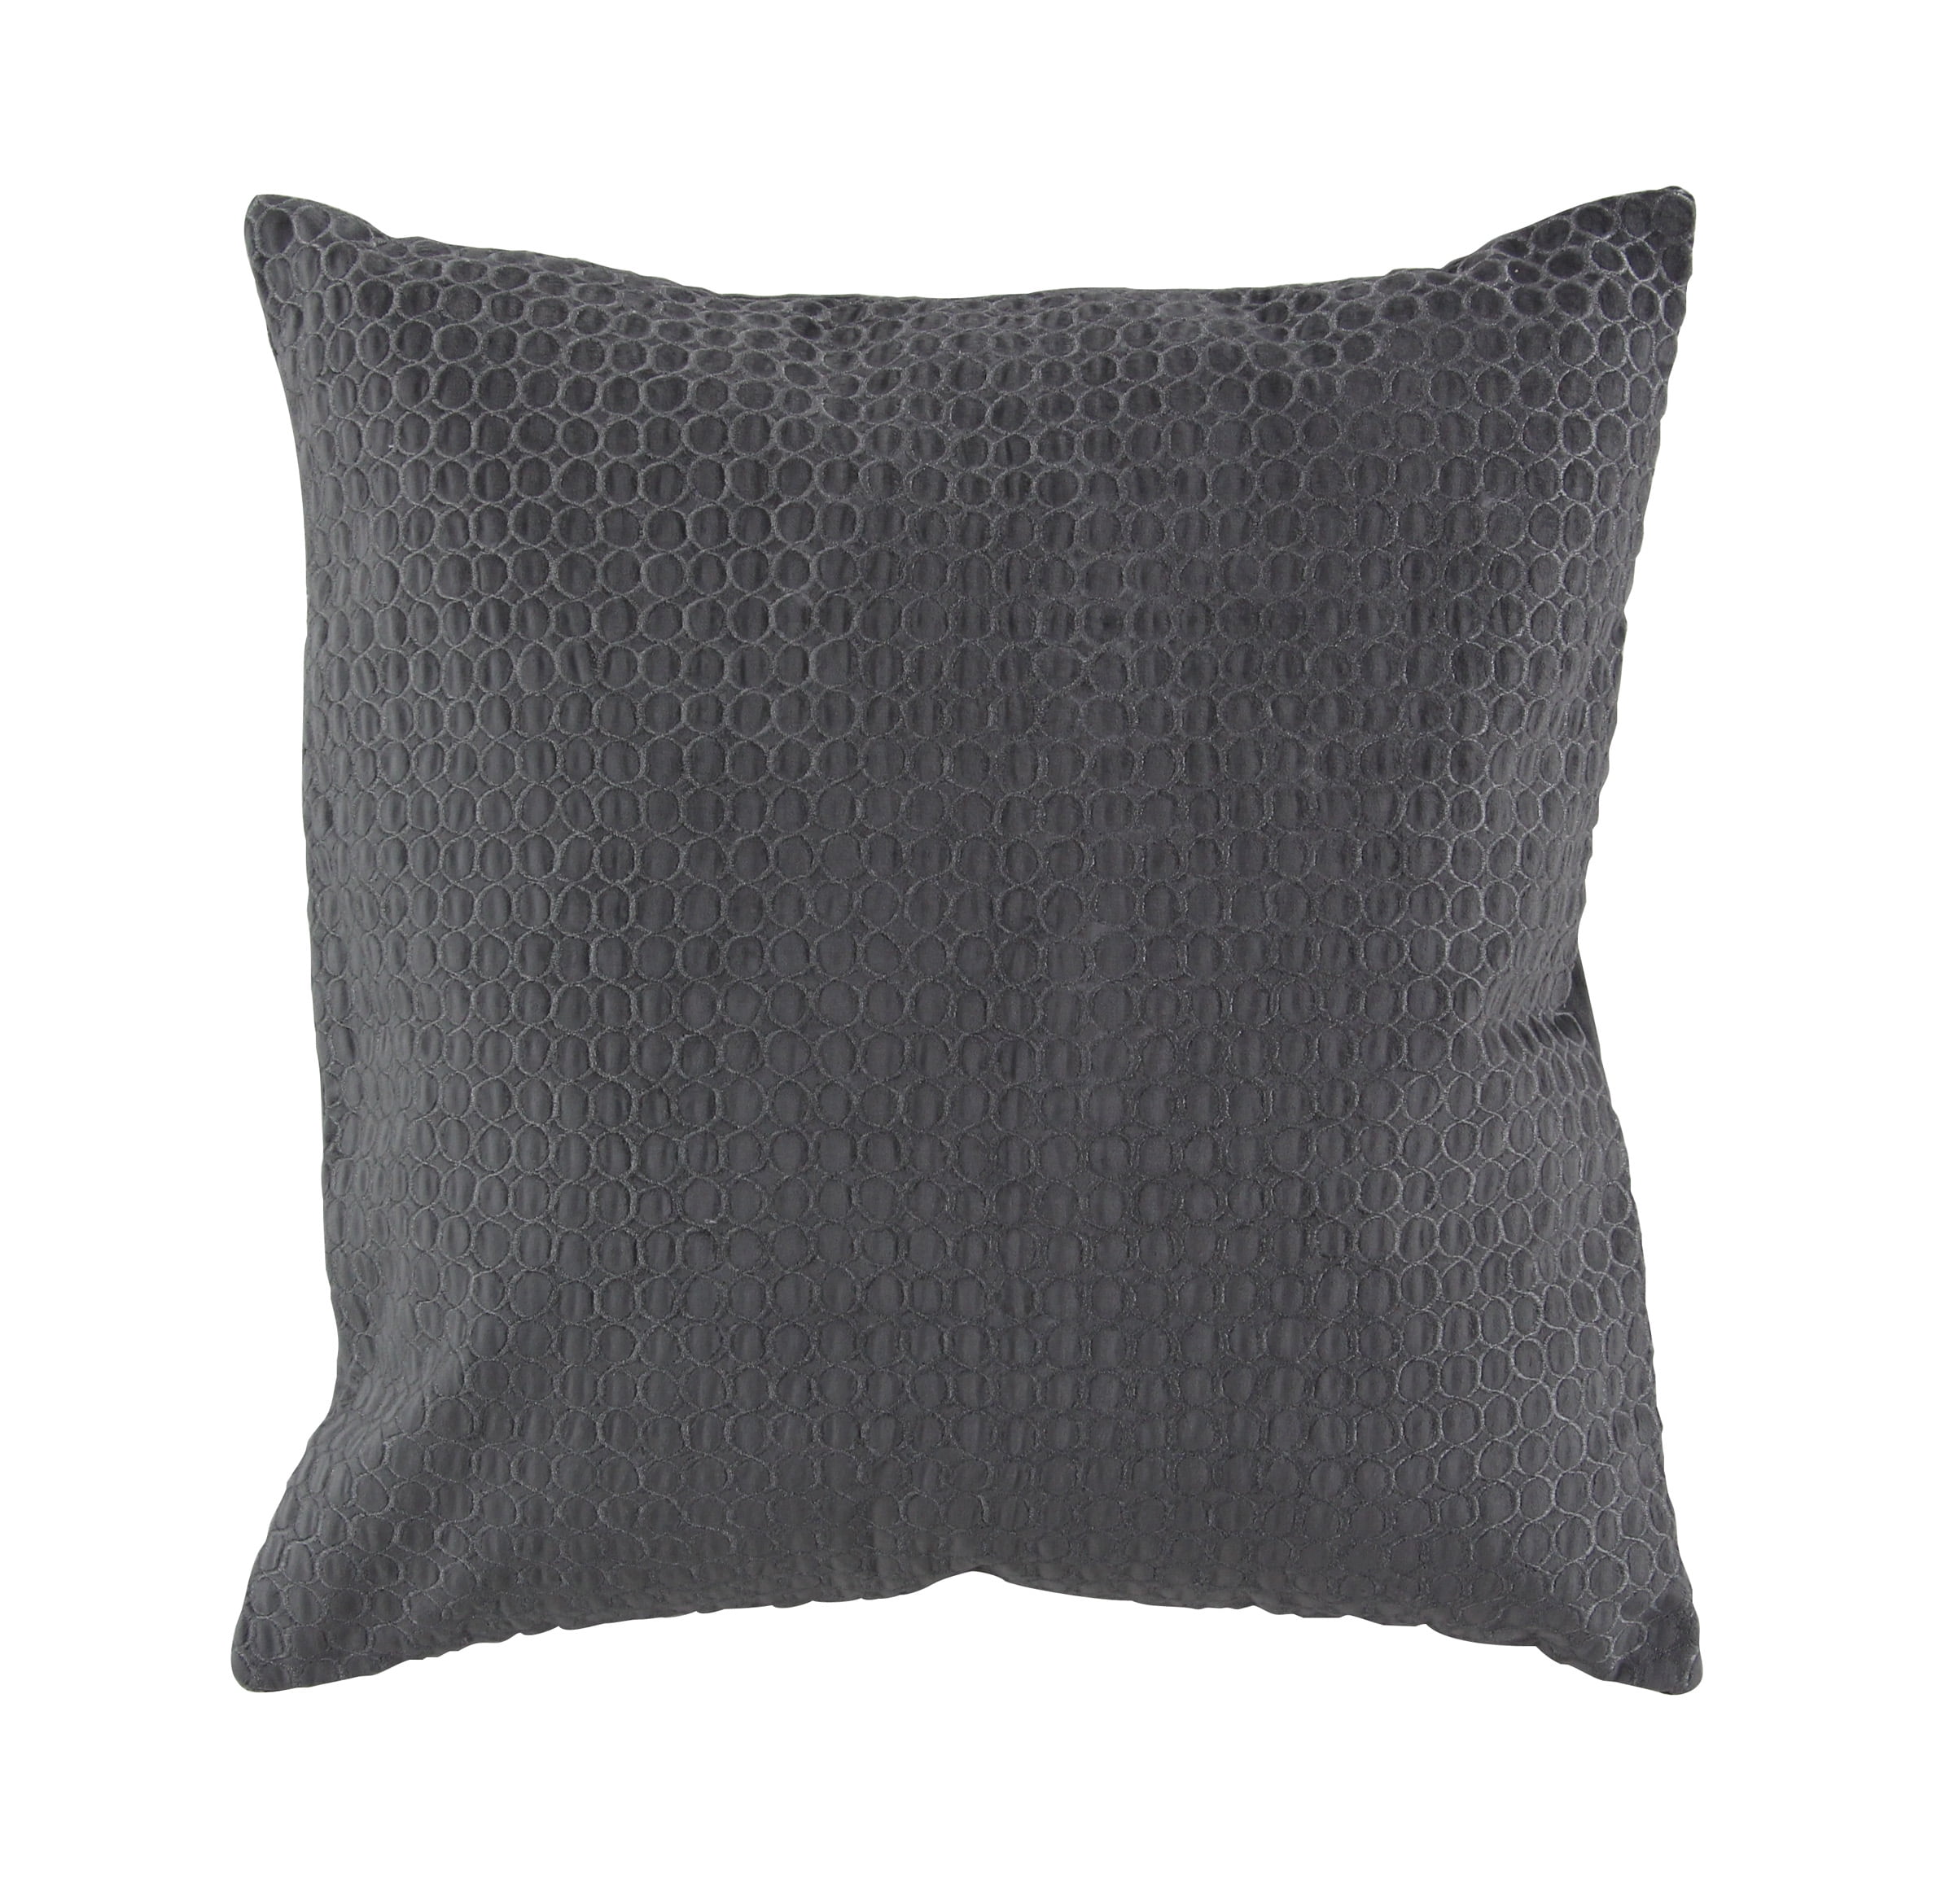 Decmode - Large Gray Square Throw Pillow with Metallic Thread Circles ...